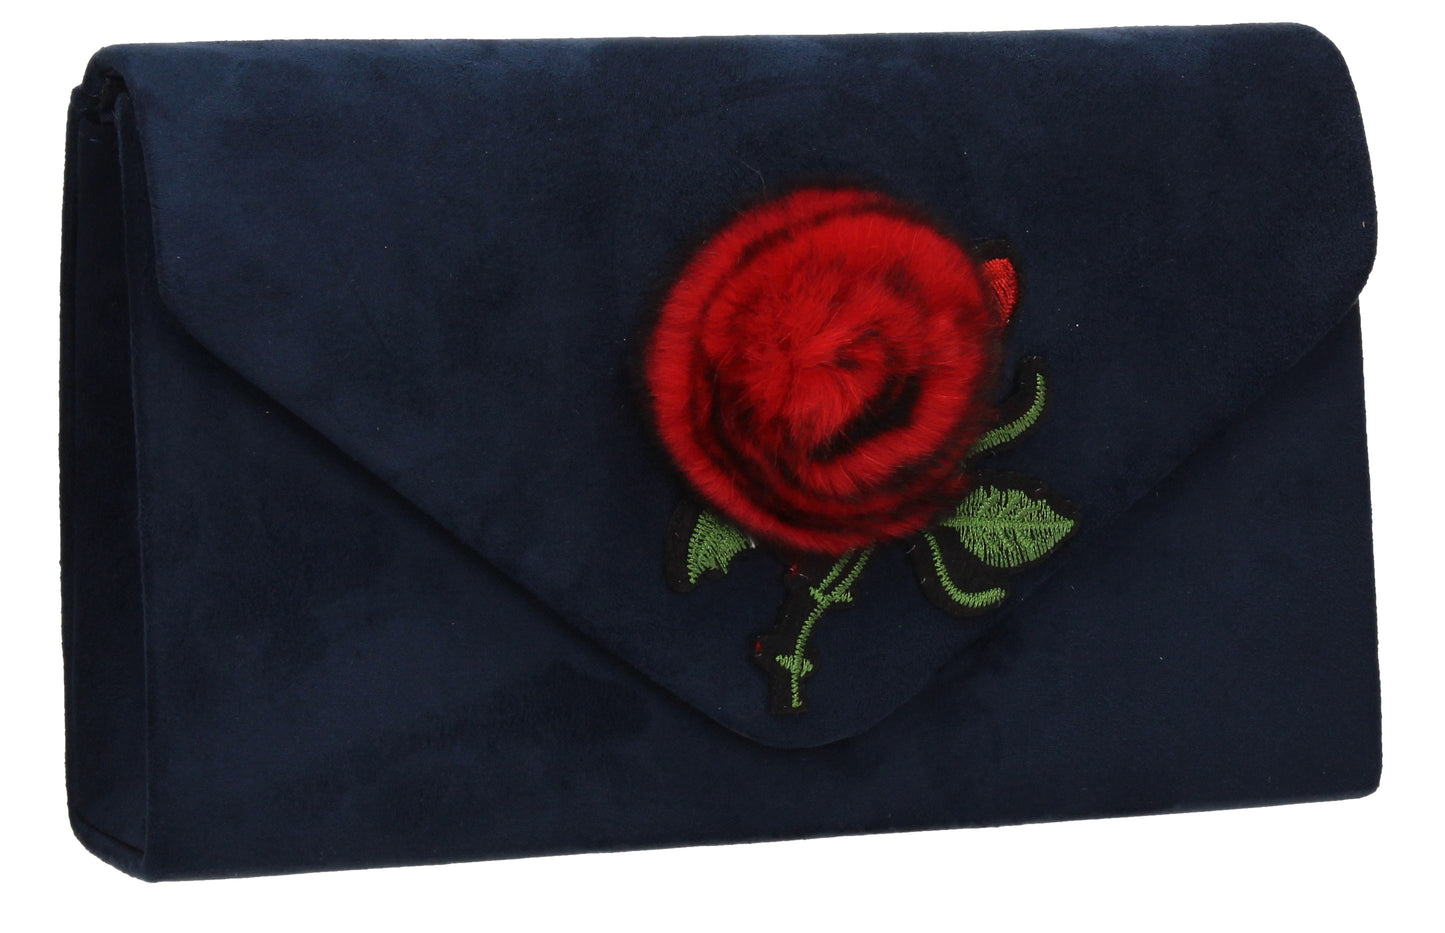 SWANKYSWANS Roxanne Fur Rose Clutch Bag Navy Cute Cheap Clutch Bag For Weddings School and Work